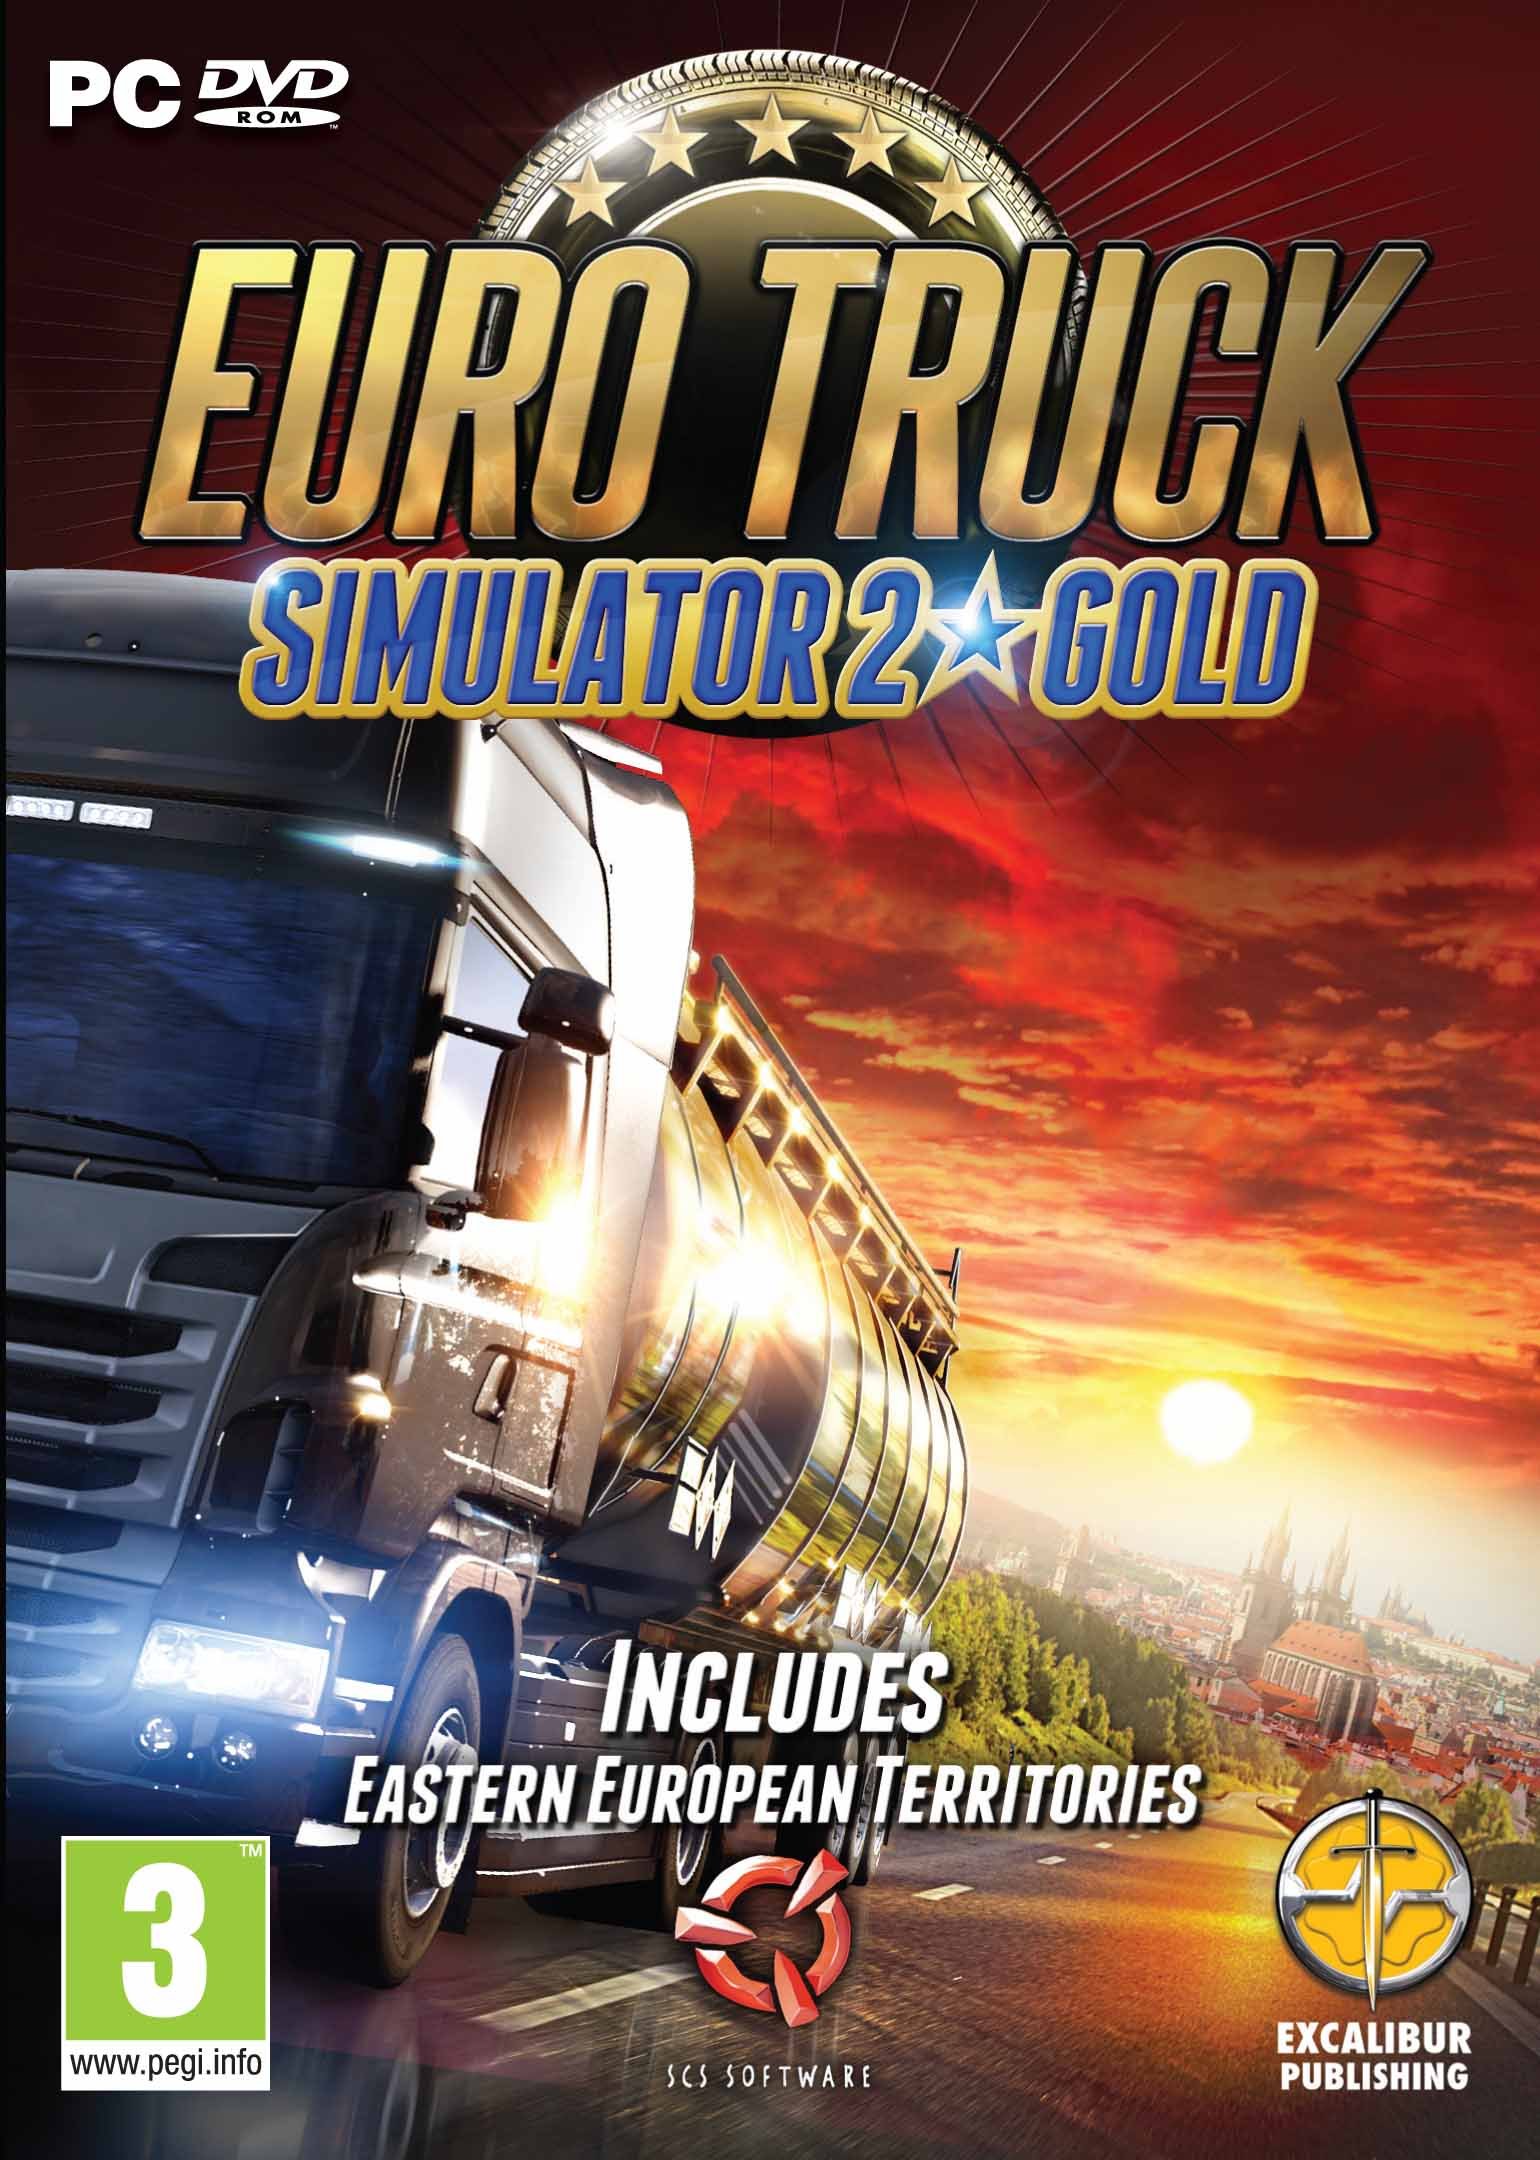 Euro Truck Simulator 2 Gold (PC CD) (UK)